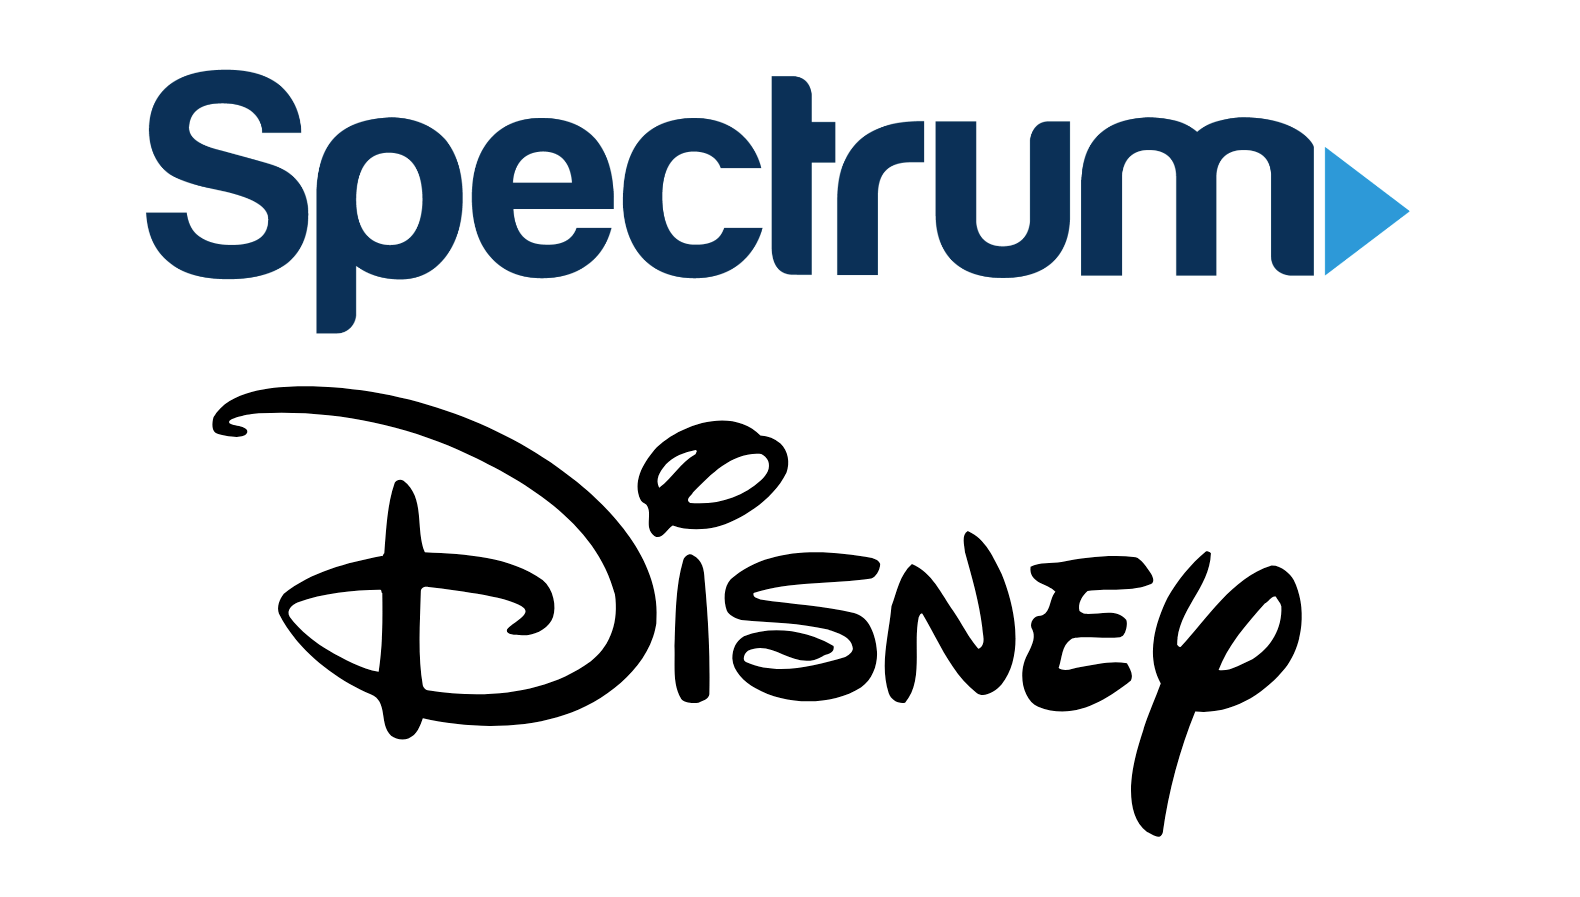 Spectrum Disney